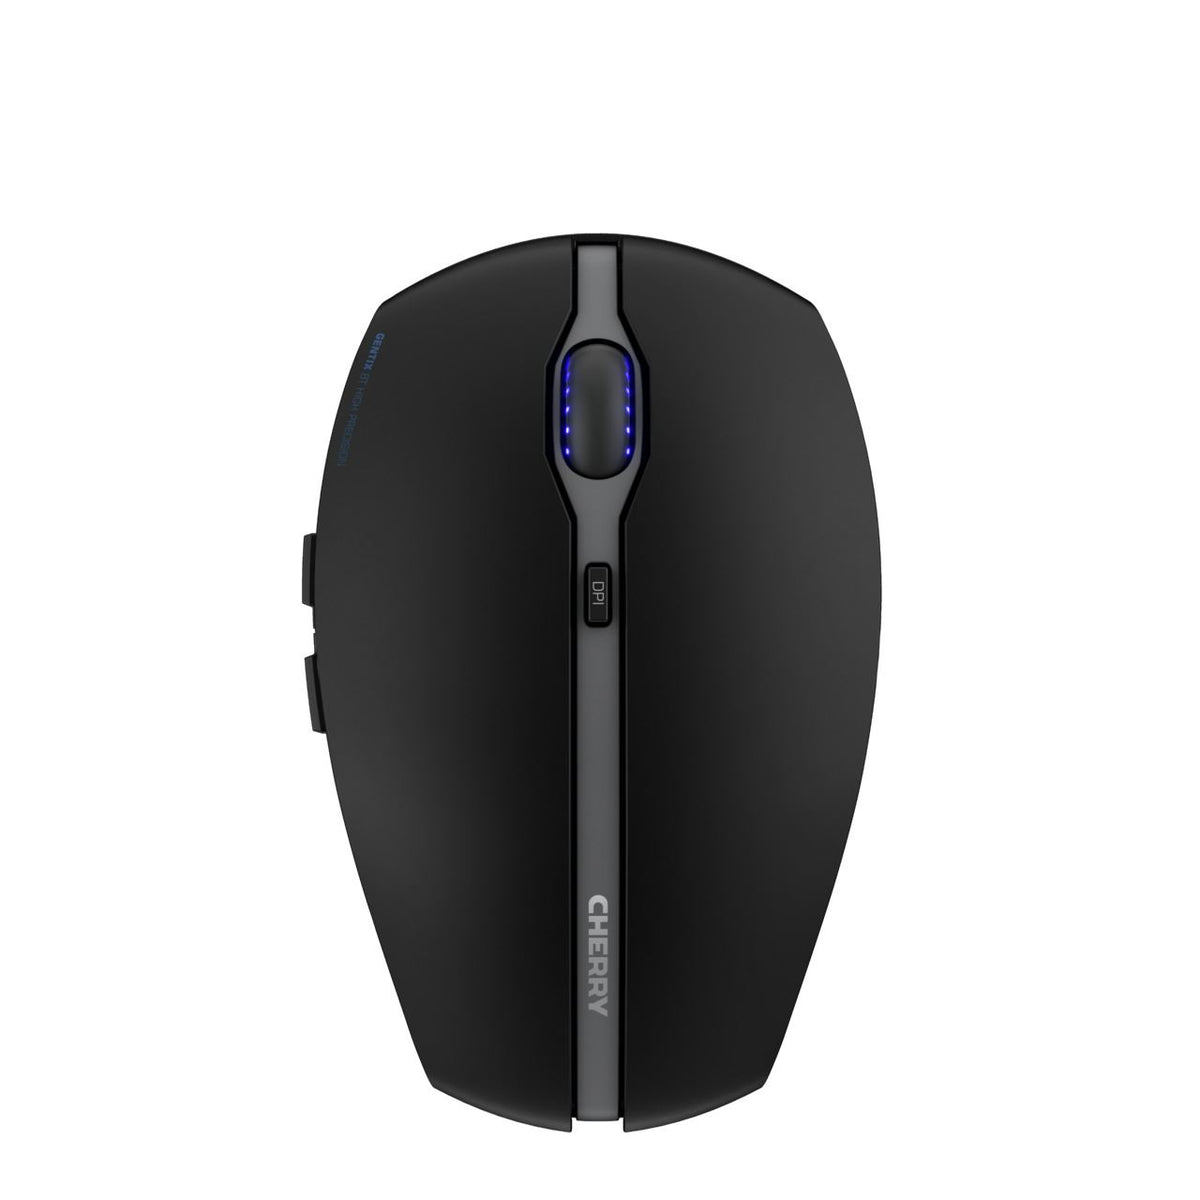 CHERRY GENTIX BT Bluetooth Optical mouse in Black - 2,000 DPI